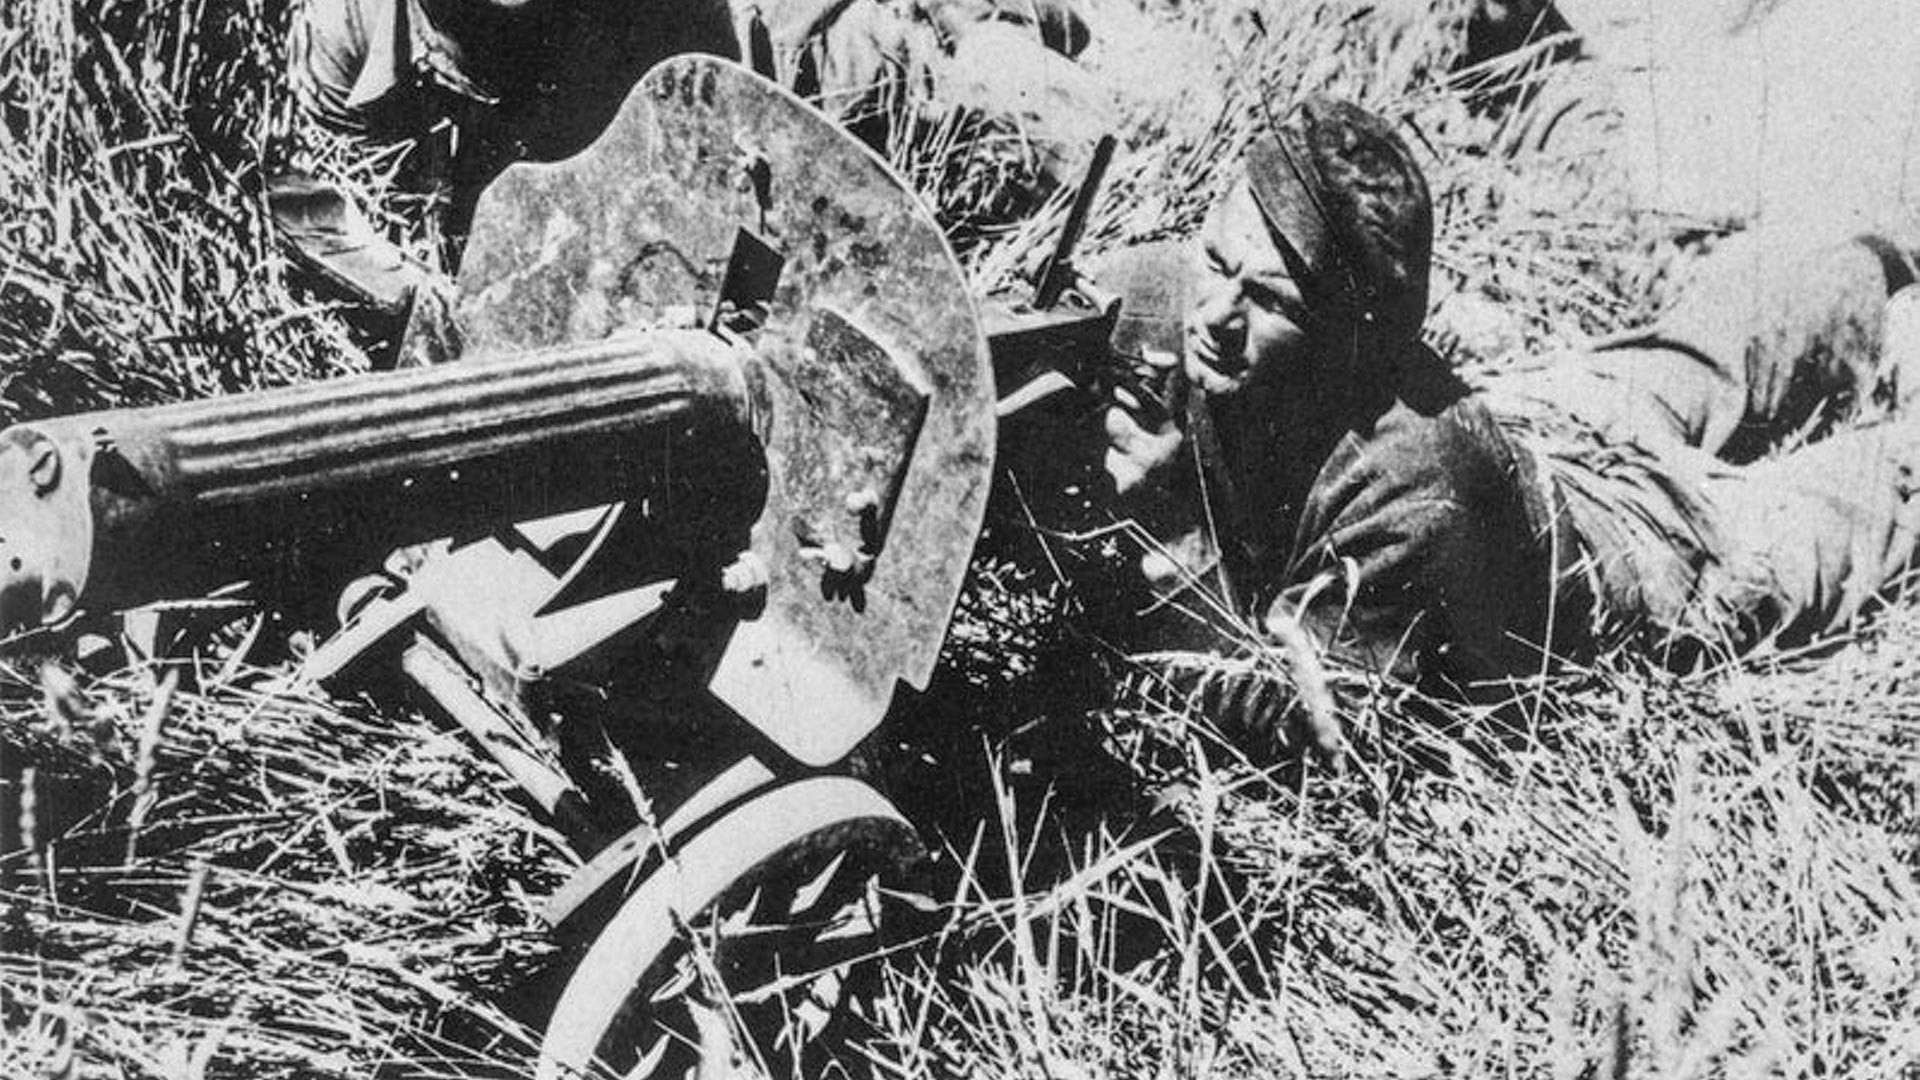 International brigade soldiers with a Soviet Russian machine gun during the Spanish Civil War.